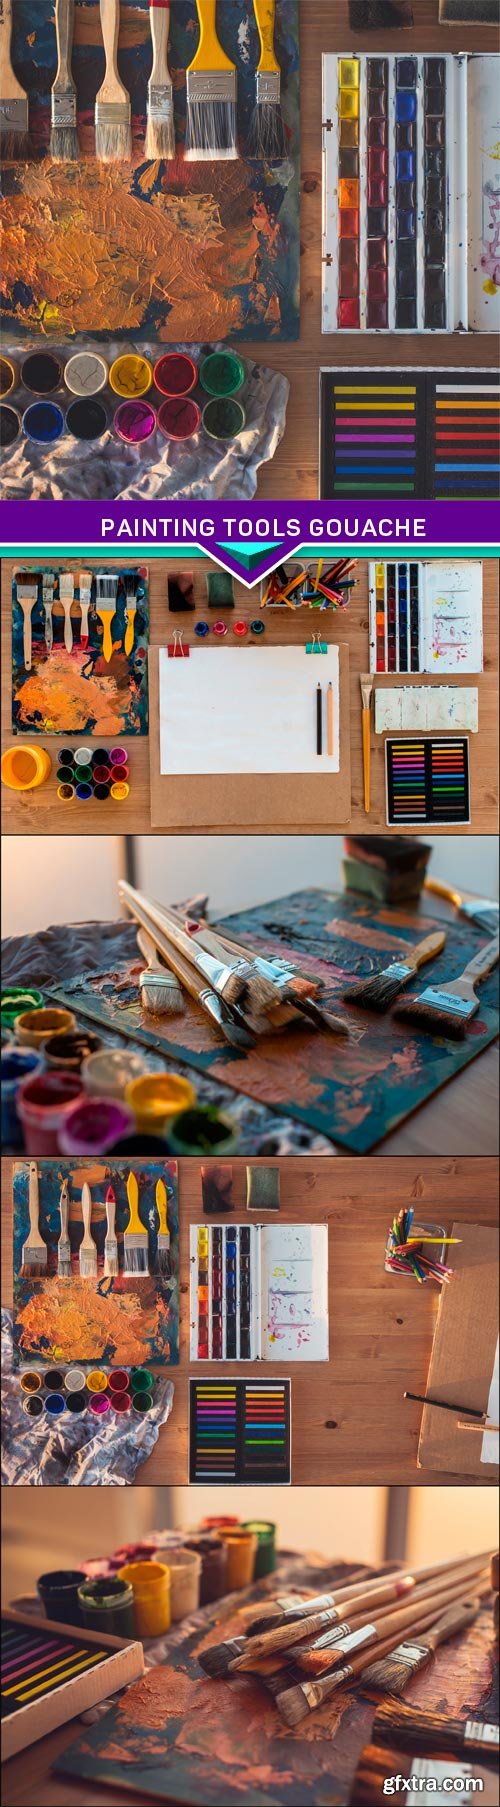 Painting tools gouache, watercolor and brush in art studio 5X JPEG